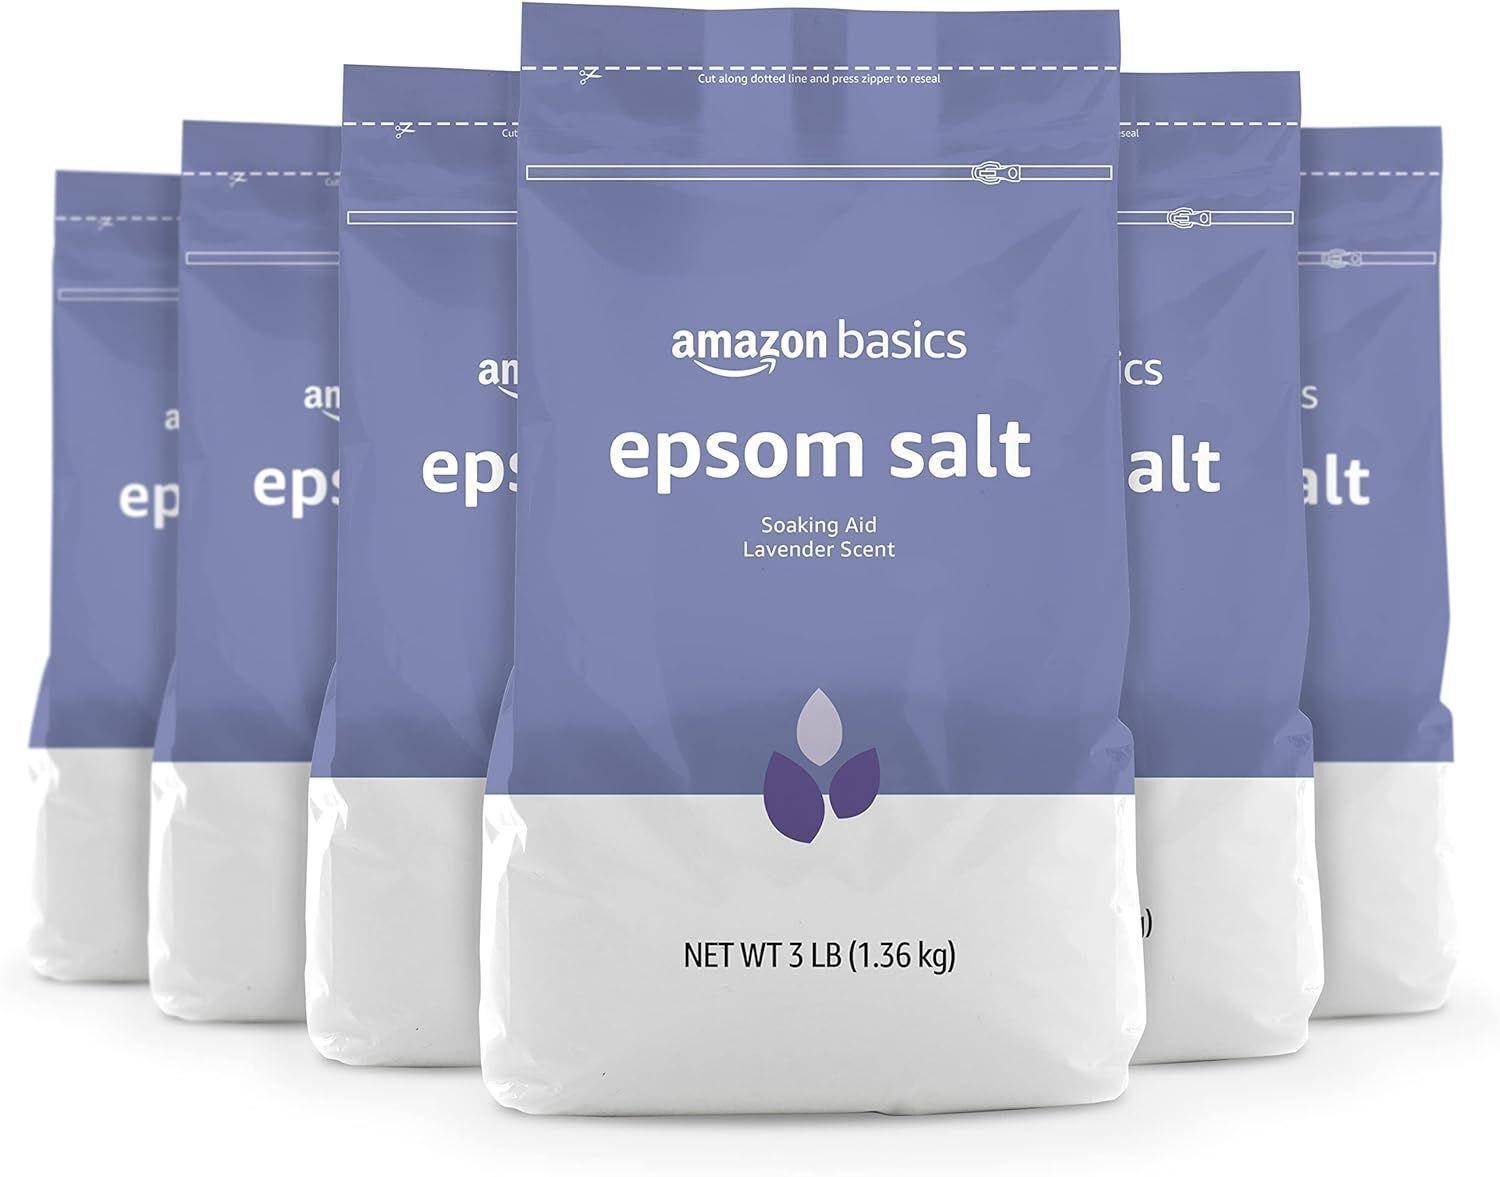 Amazon Basics Epsom Salt Soaking Aid 6-Pack